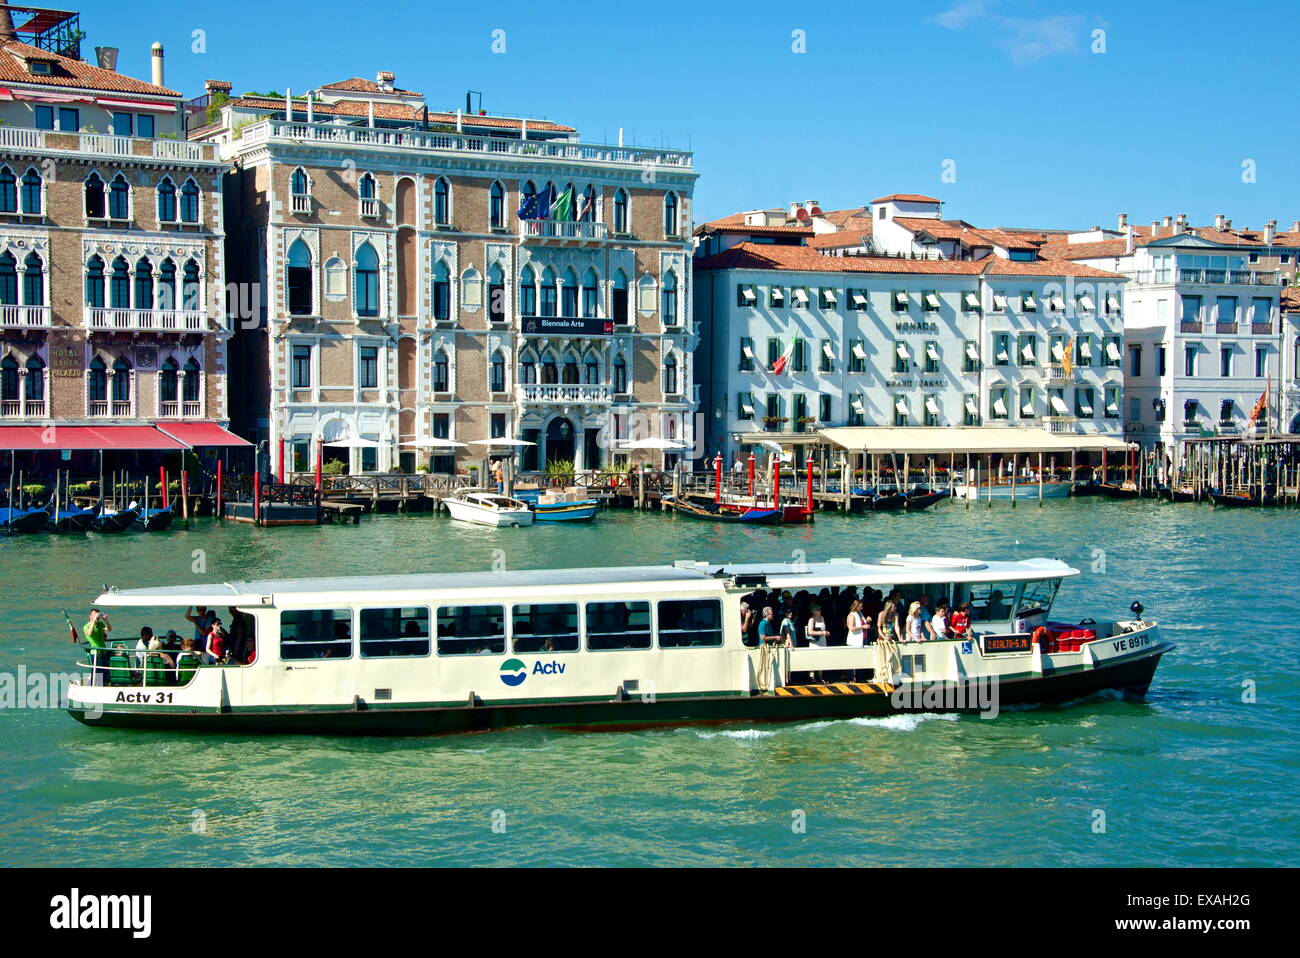 Vaporetto, Hotel Bauer, Hotel Monaco, palace facades and gondolas on the Grand Canal, Venice, UNESCO Site, Veneto, Italy Stock Photo